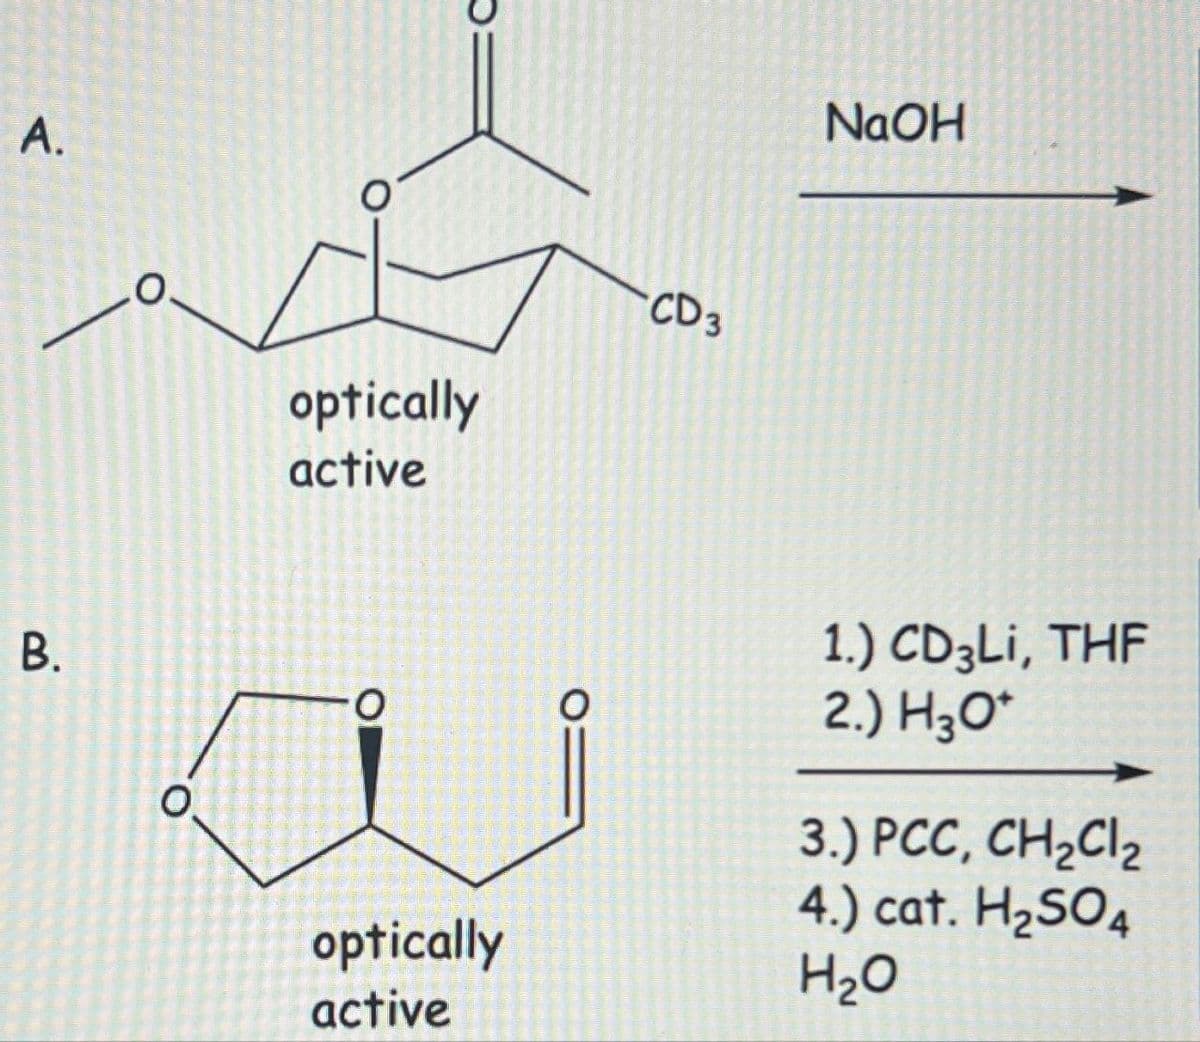 A.
B.
O
optically
active
O
optically
active
O
CD 3
NaOH
1.) CD3Li, THF
2.) H3O+
3.) PCC, CH₂Cl₂
4.) cat. H₂SO4
H₂O